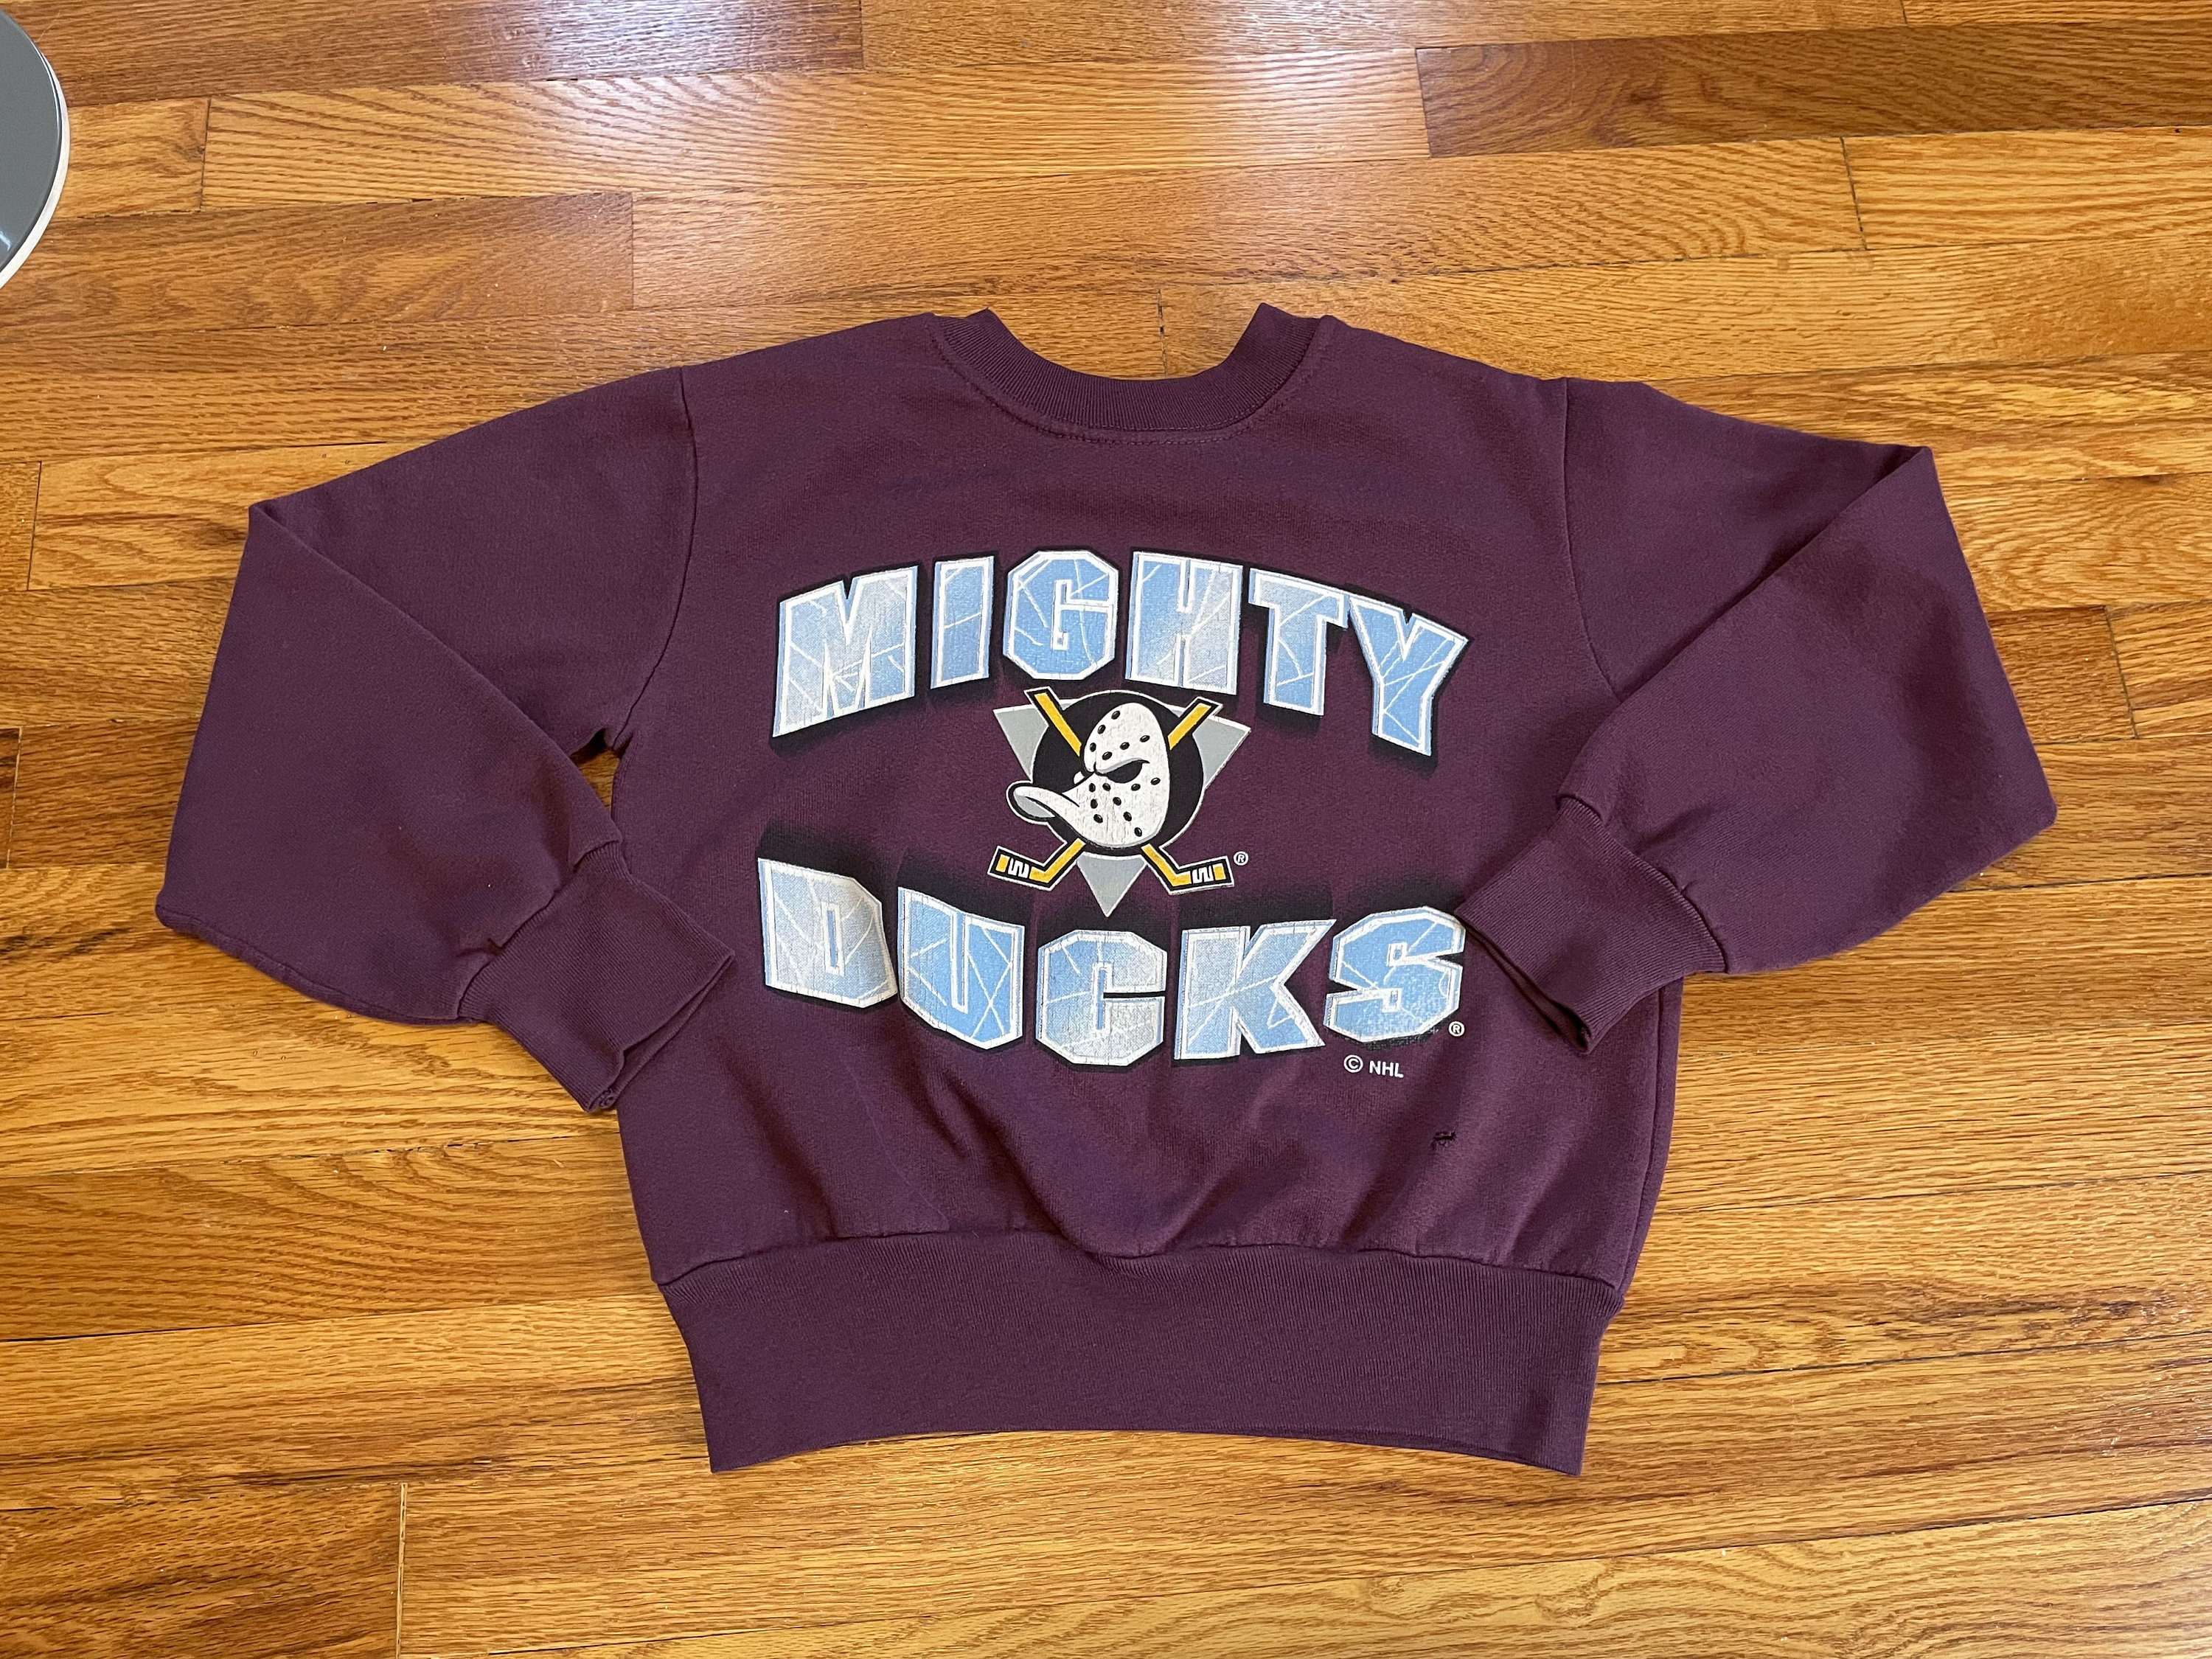 1993-94 Mighty Ducks of Anaheim Nutmeg Mills Jersey